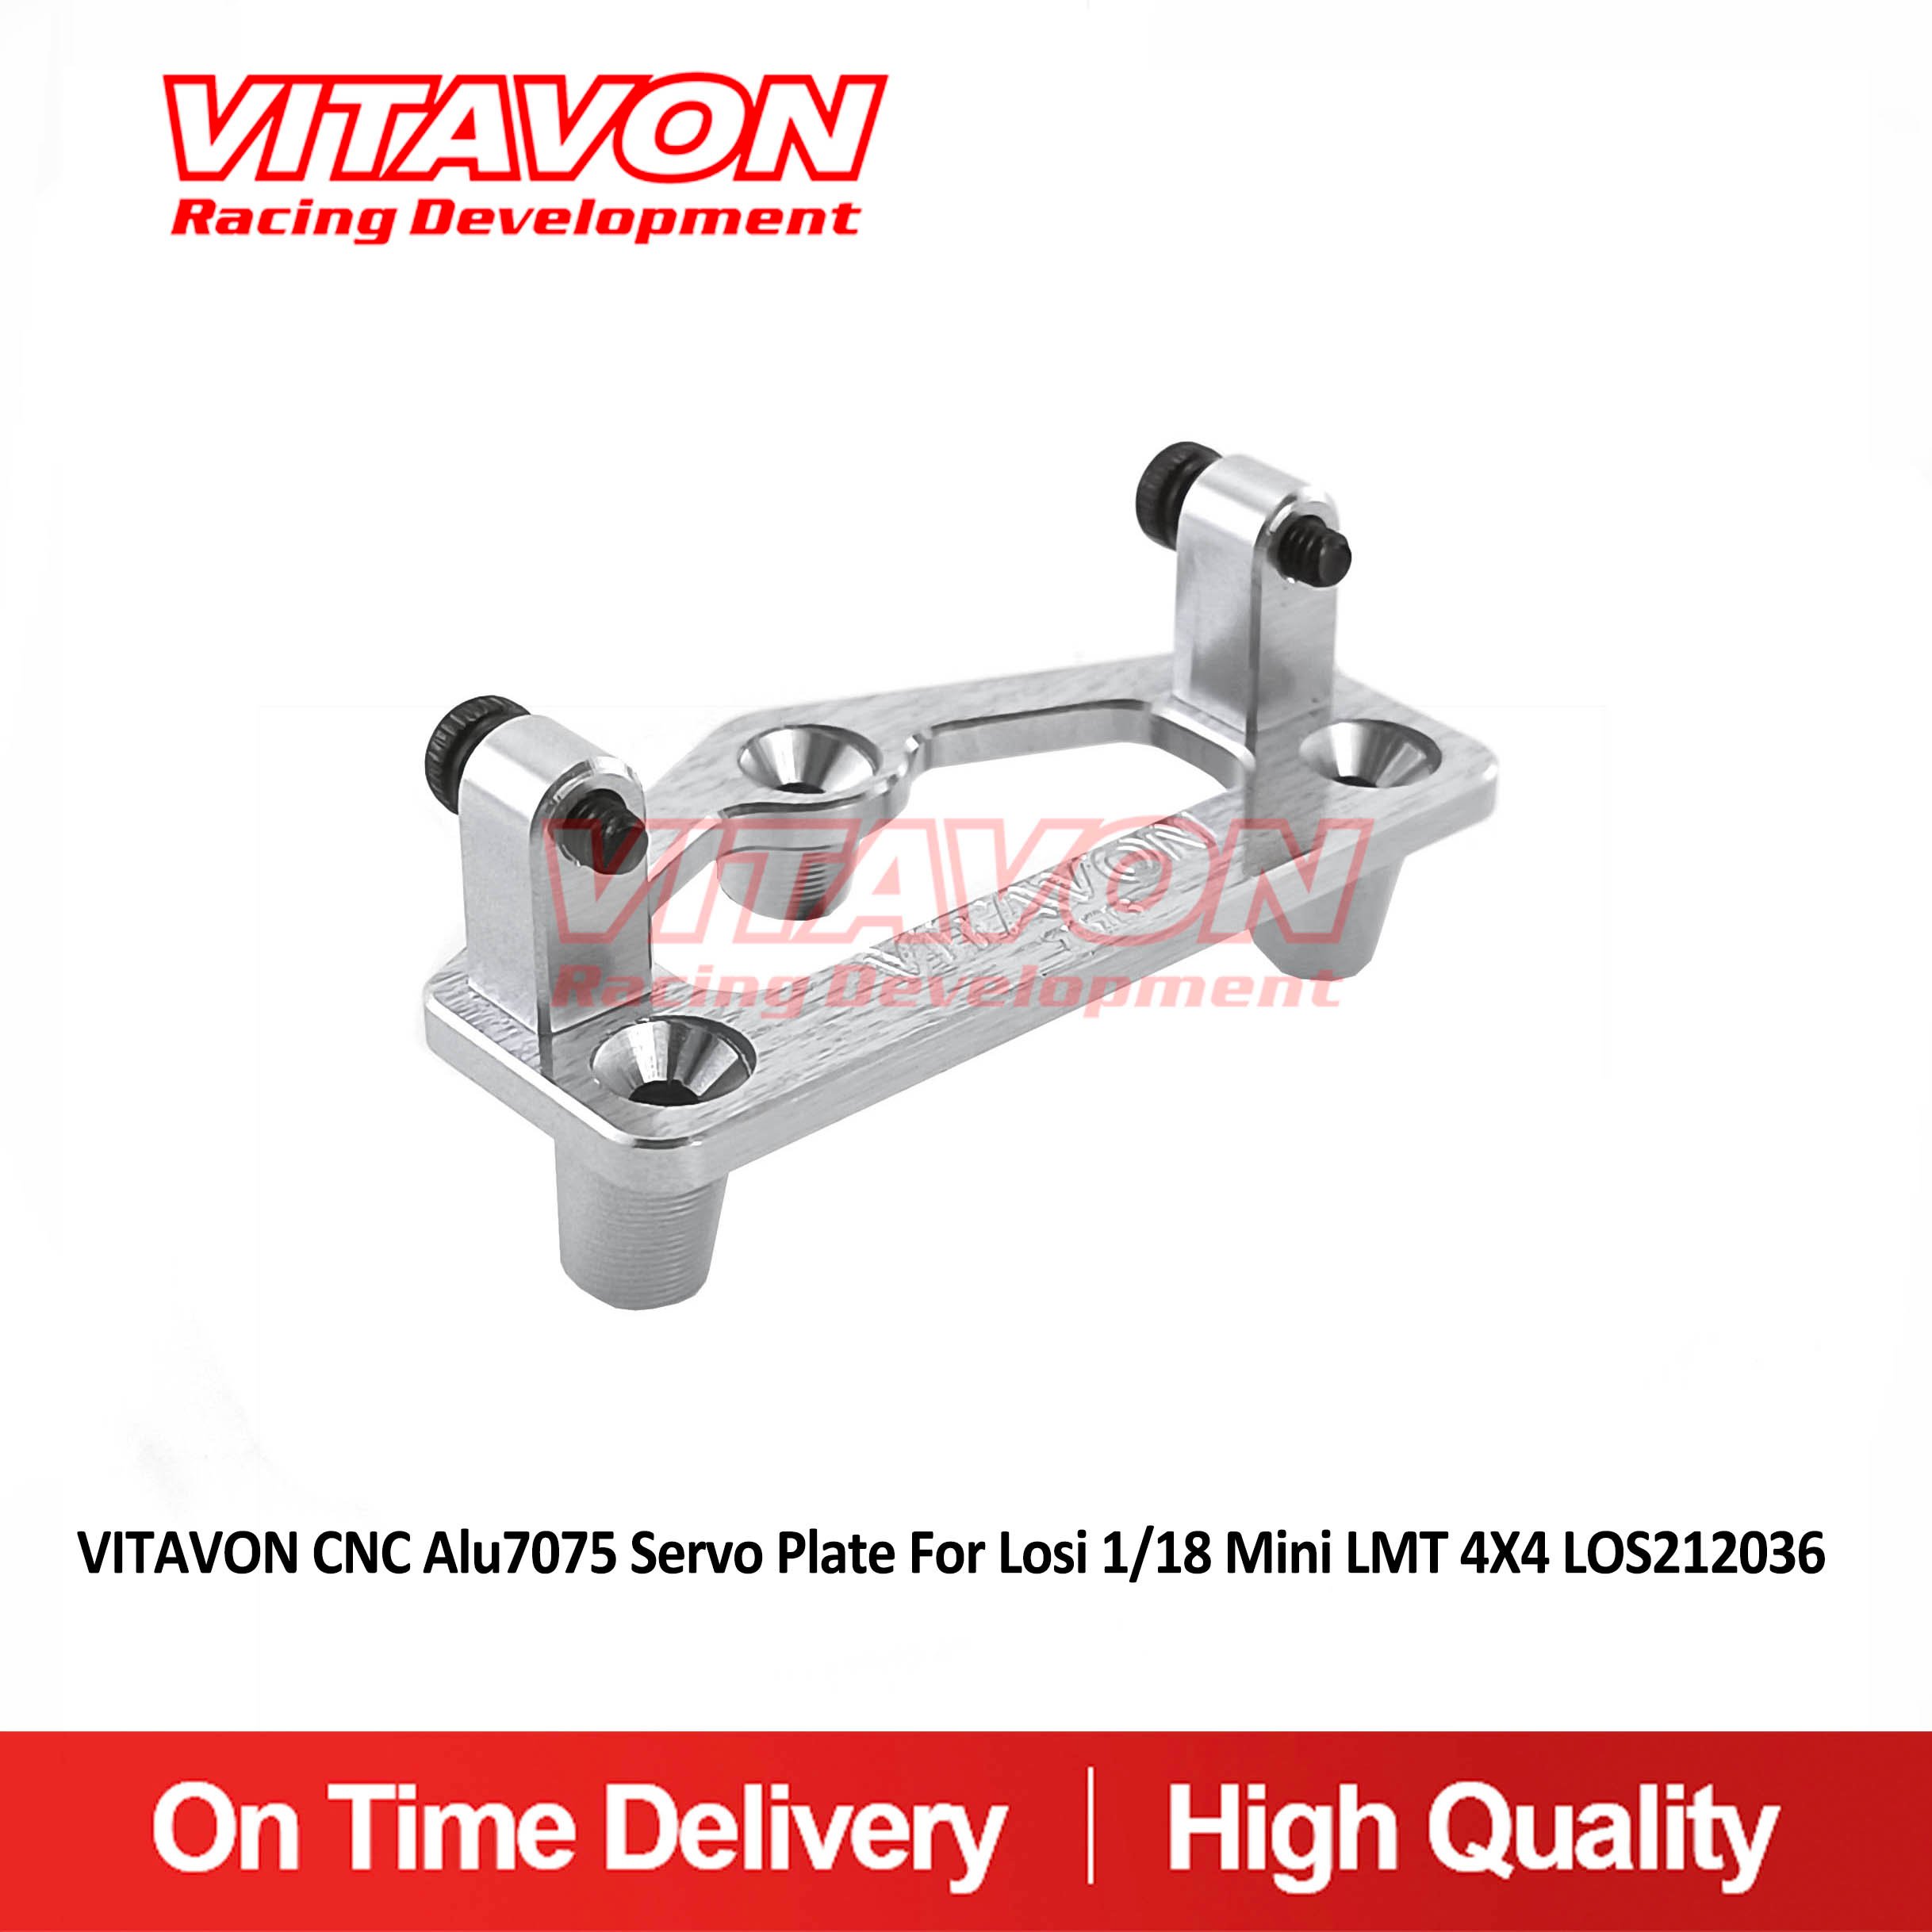 VITAVON CNC Alu7075 Servo Plate For Losi 1/18 Mini LMT 4X4 LOS212036